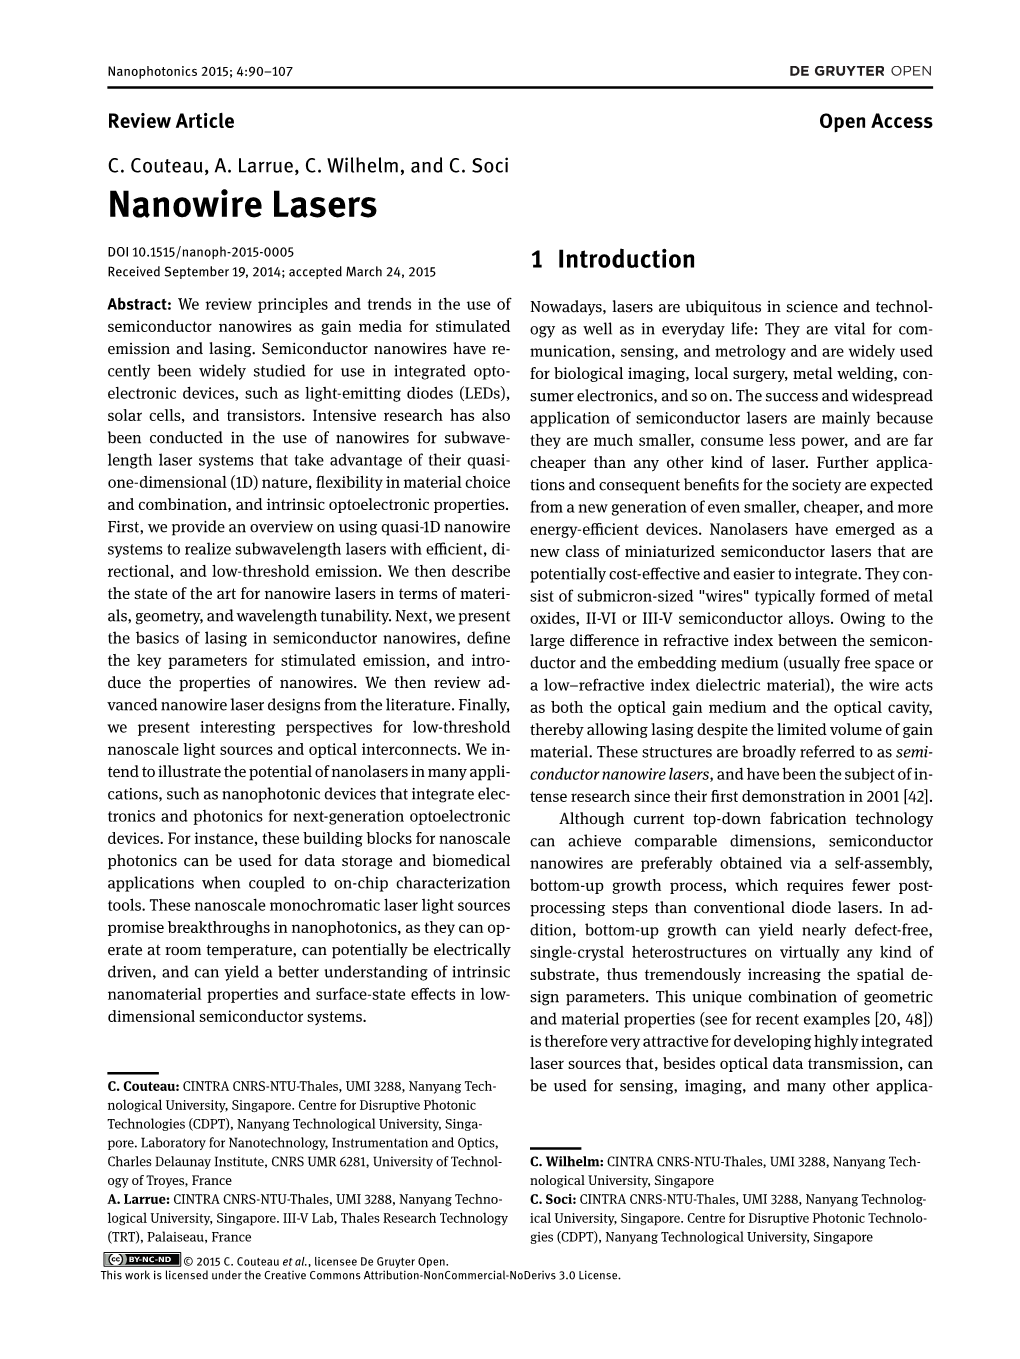 Nanowire Lasers